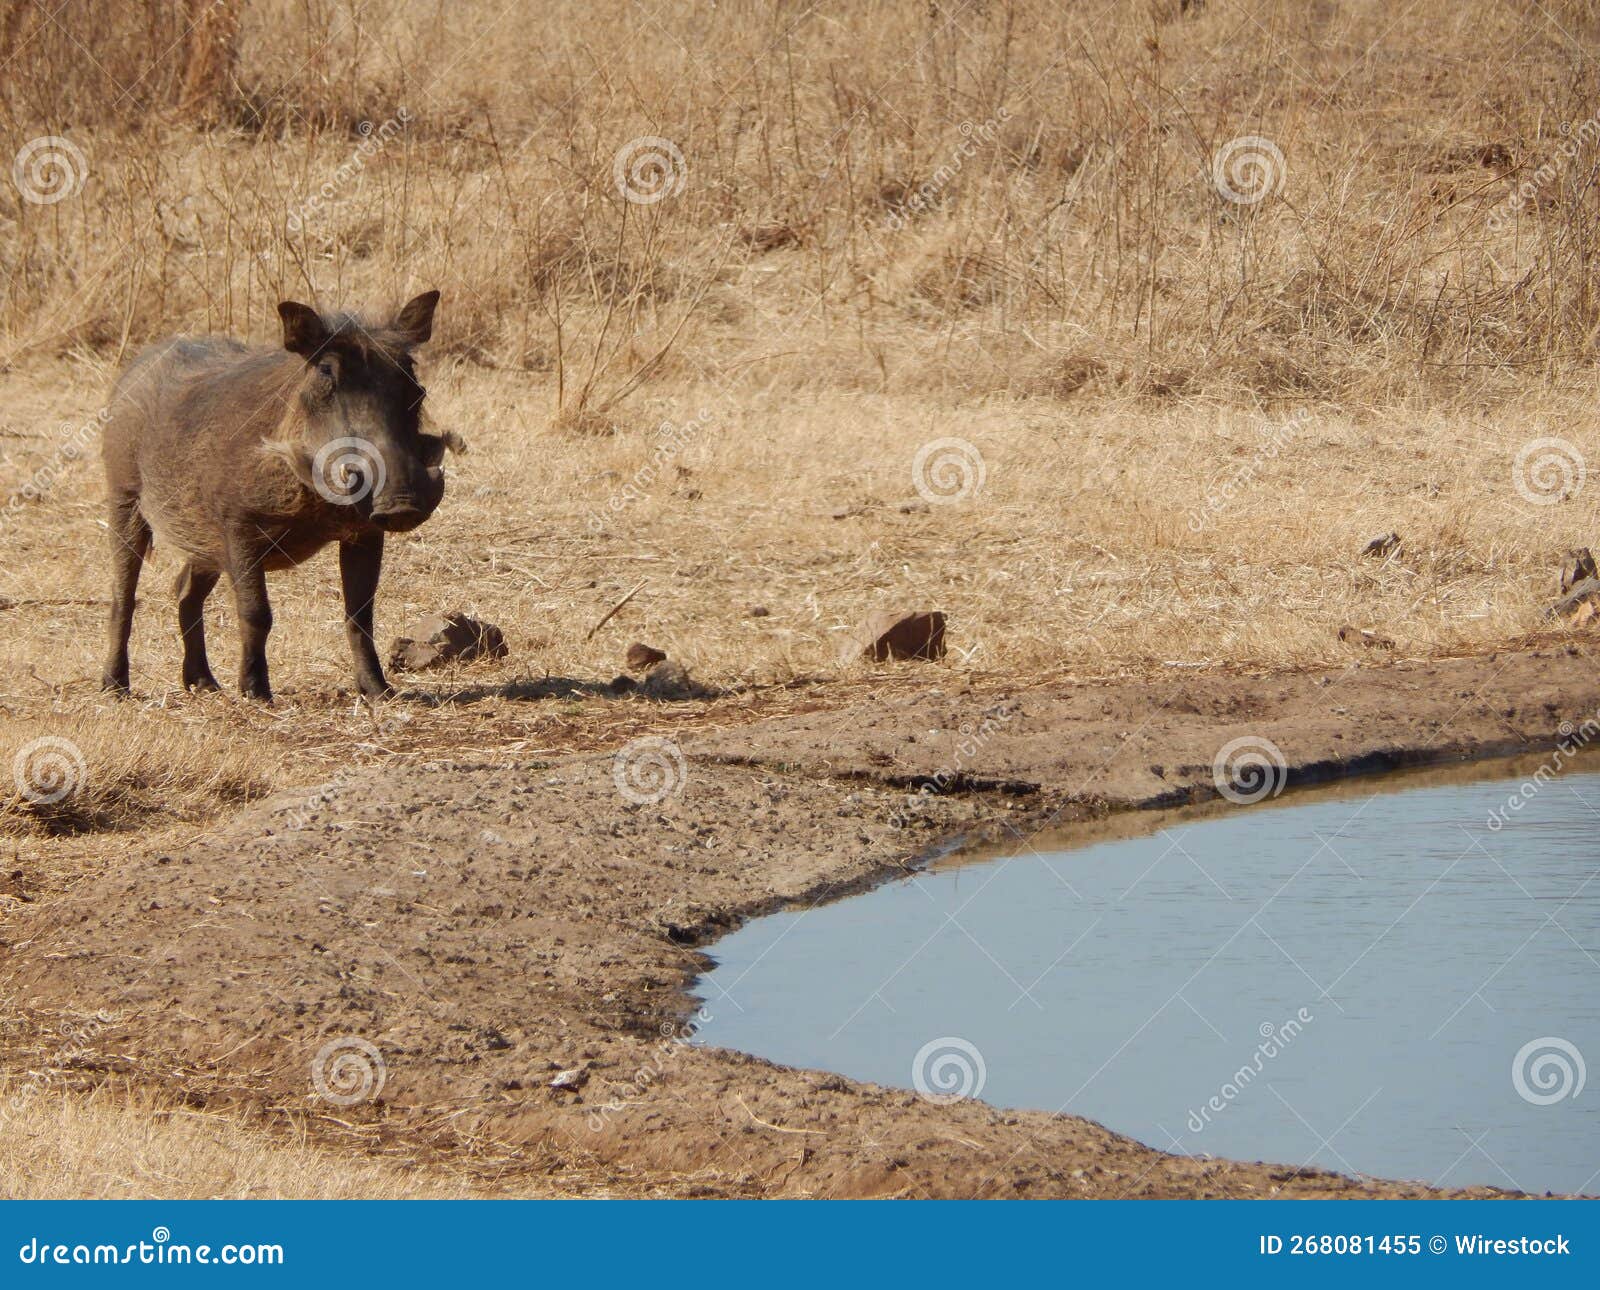 https://thumbs.dreamstime.com/z/common-warthog-standing-small-pond-common-warthog-standing-small-pond-268081455.jpg